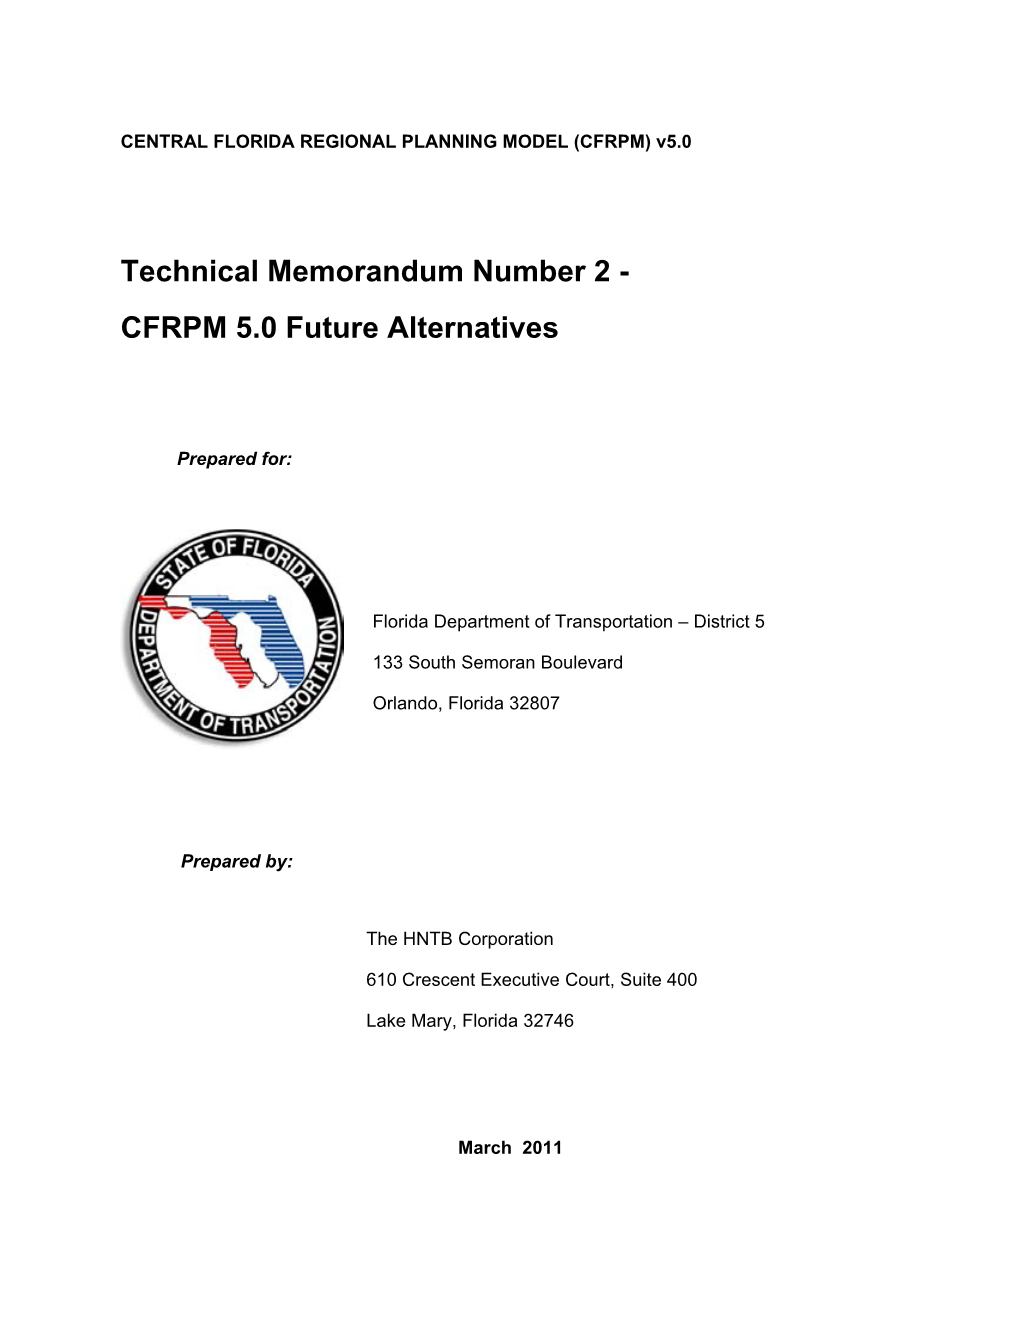 CFRPM 5.0 Future Year Alternatives